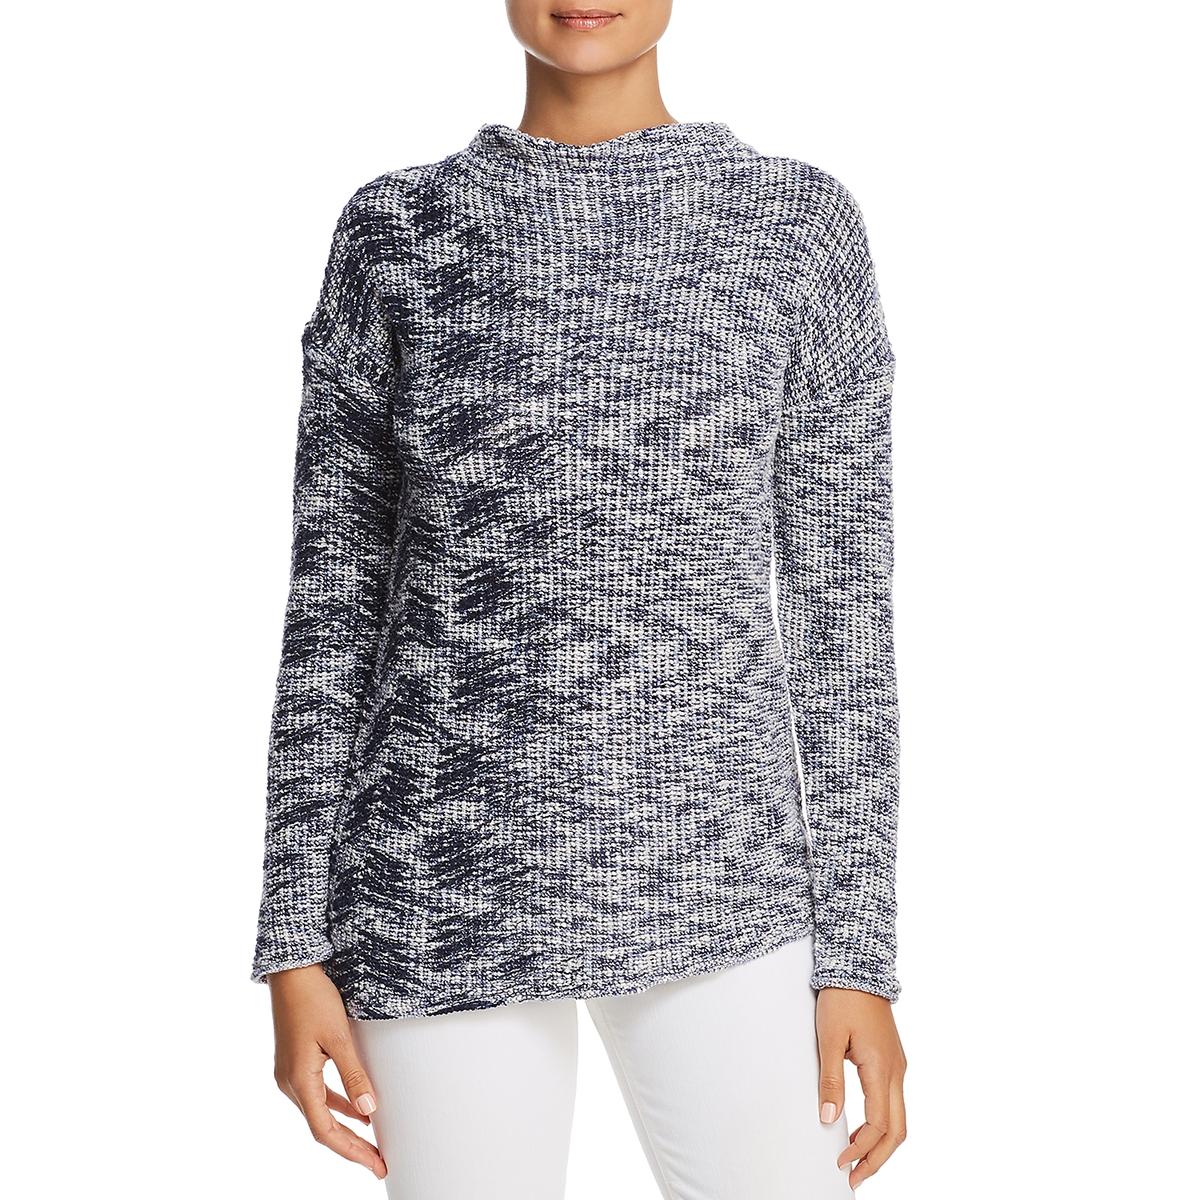 Nic + Zoe Womens Blue Asymmetric Pullover Sweater Top Petites PS BHFO ...